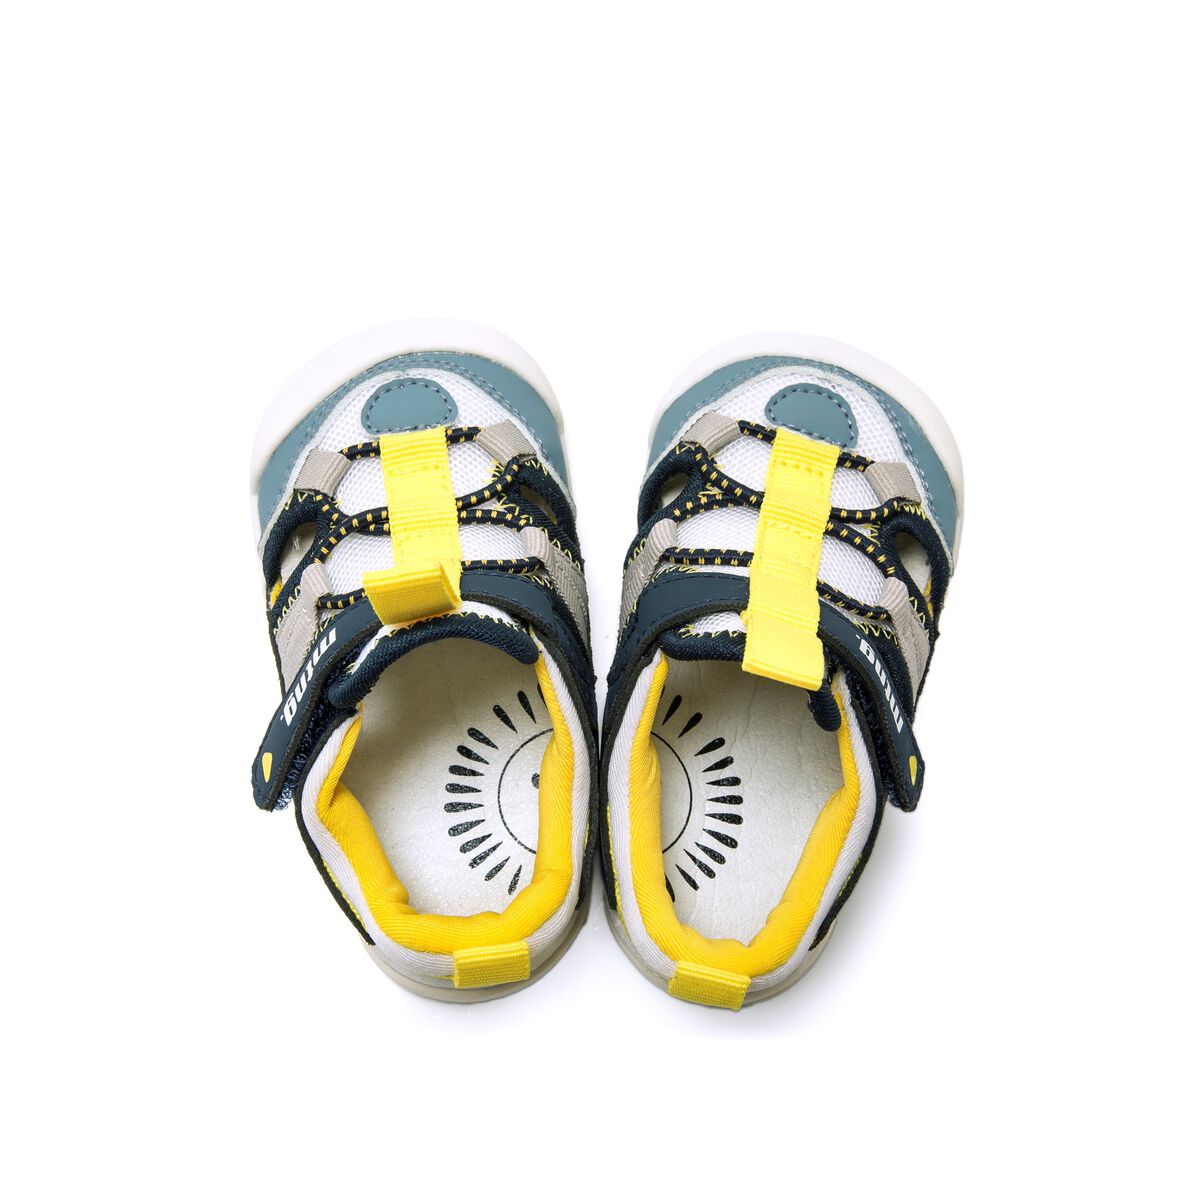 Sneakers de Rapaz modelo FREE de MTNG image number 3